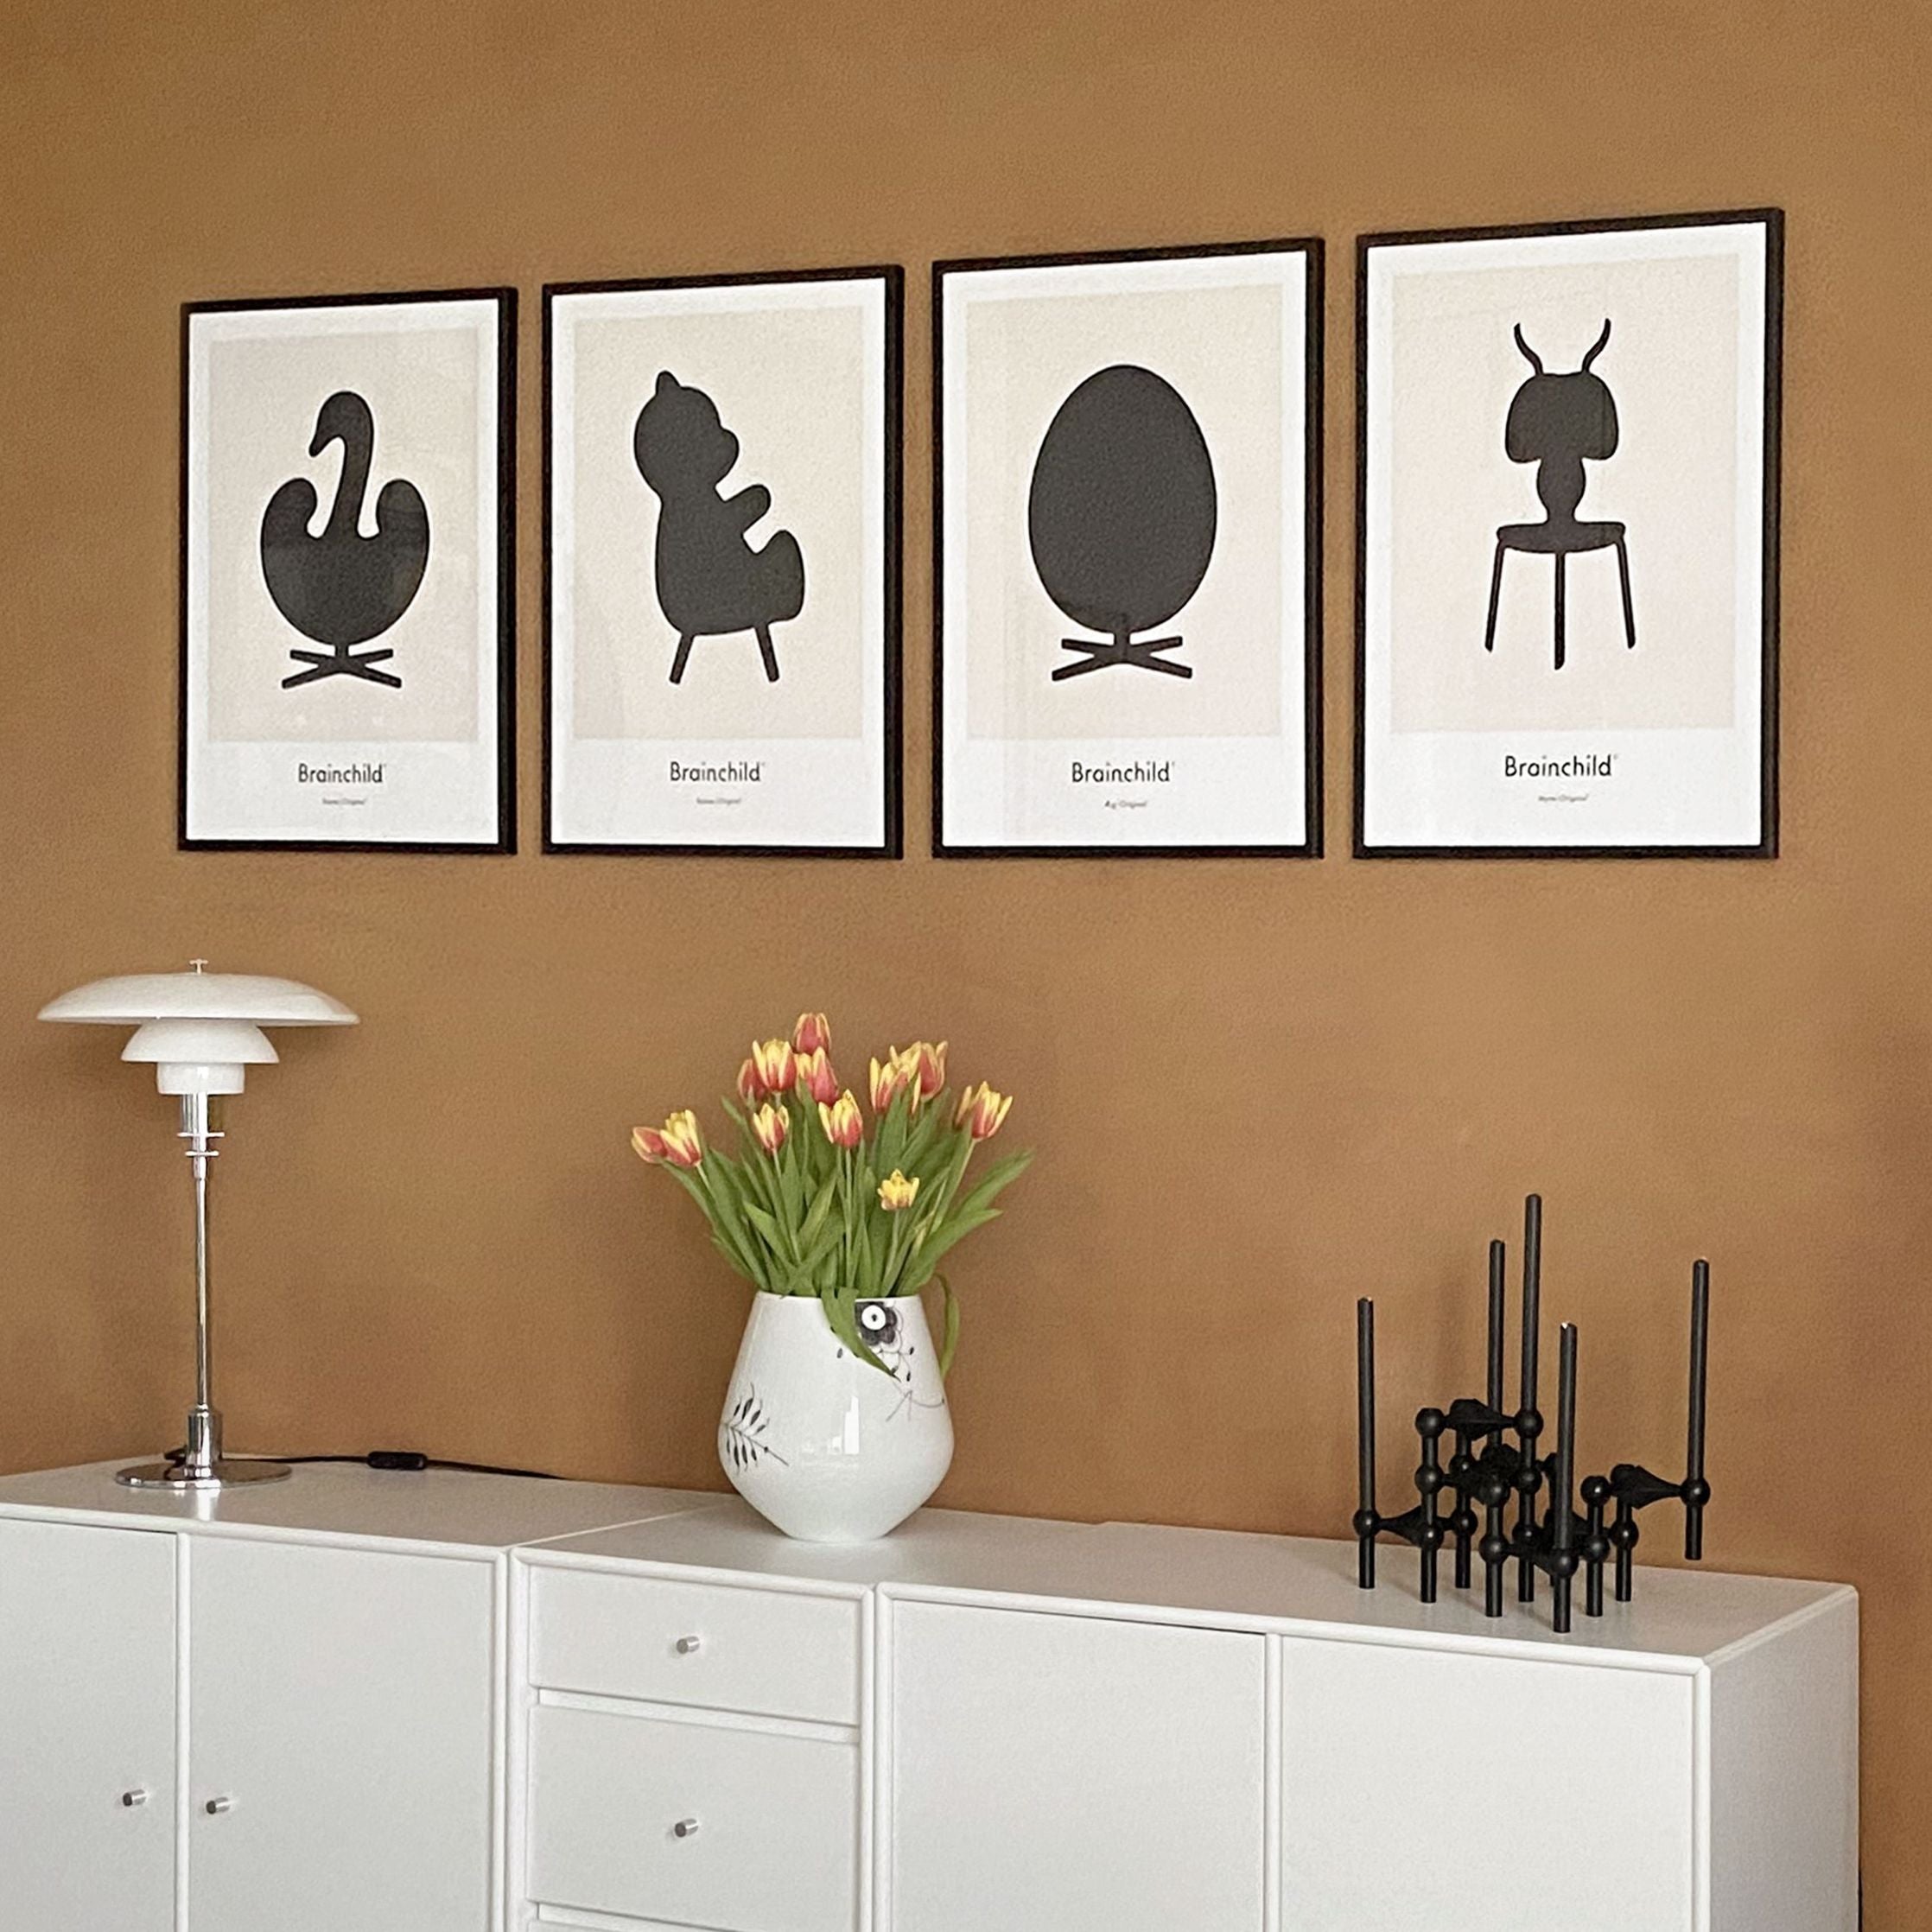 Brainchild Ant Design Icon Poster ohne Rahmen 50 X70 Cm, Grau